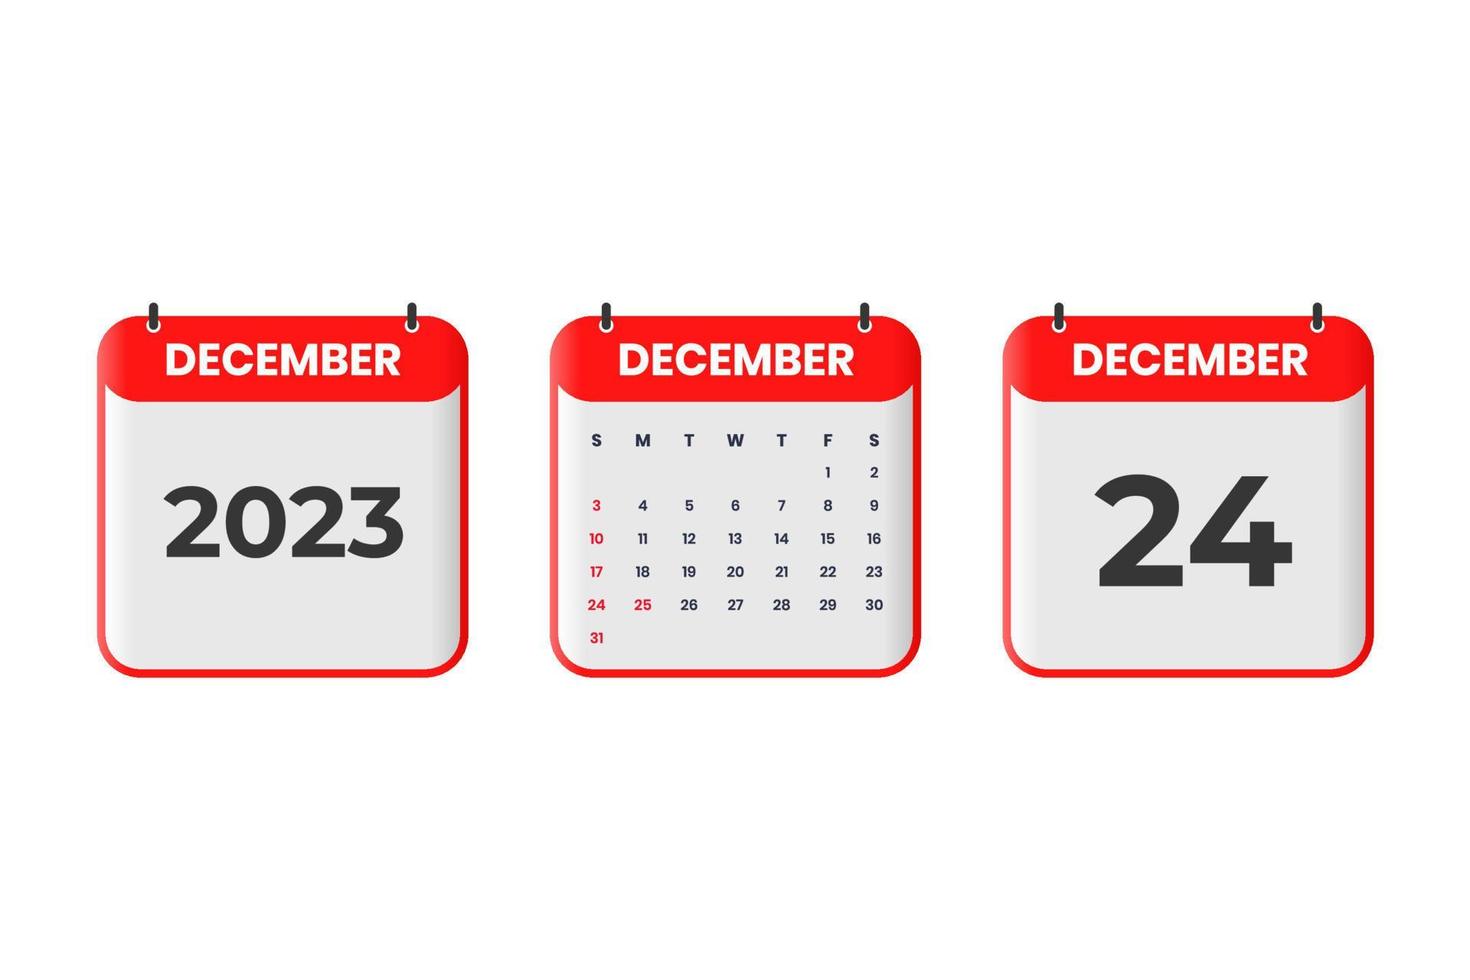 Dezember 2023 Kalenderdesign. 24. Dezember 2023 Kalendersymbol für Zeitplan, Termin, wichtiges Datumskonzept vektor